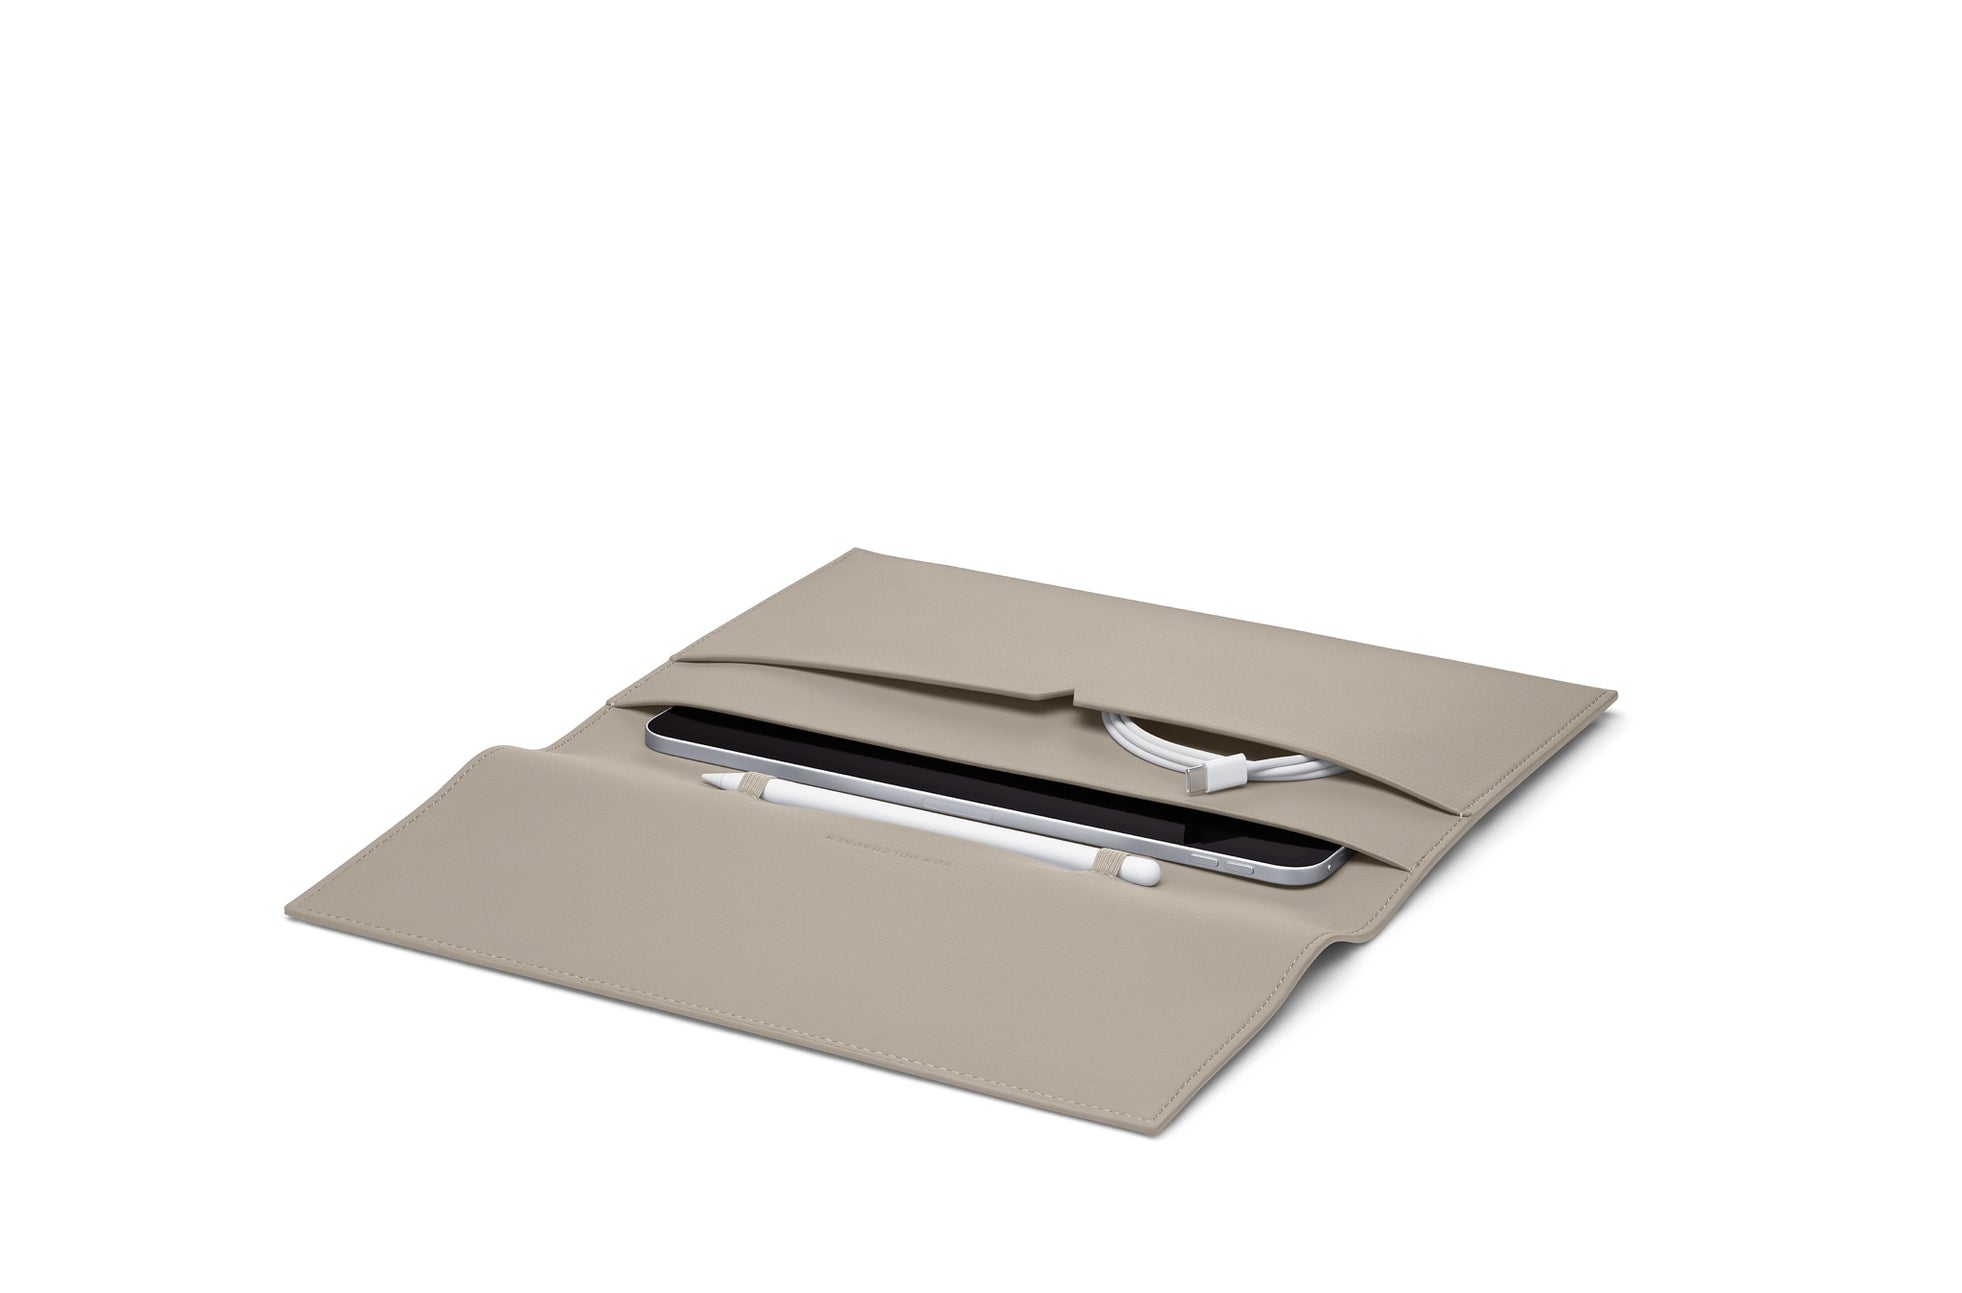 The iPad Portfolio 11-inch - Sample Sale in Technik-Leather in Stone image 3